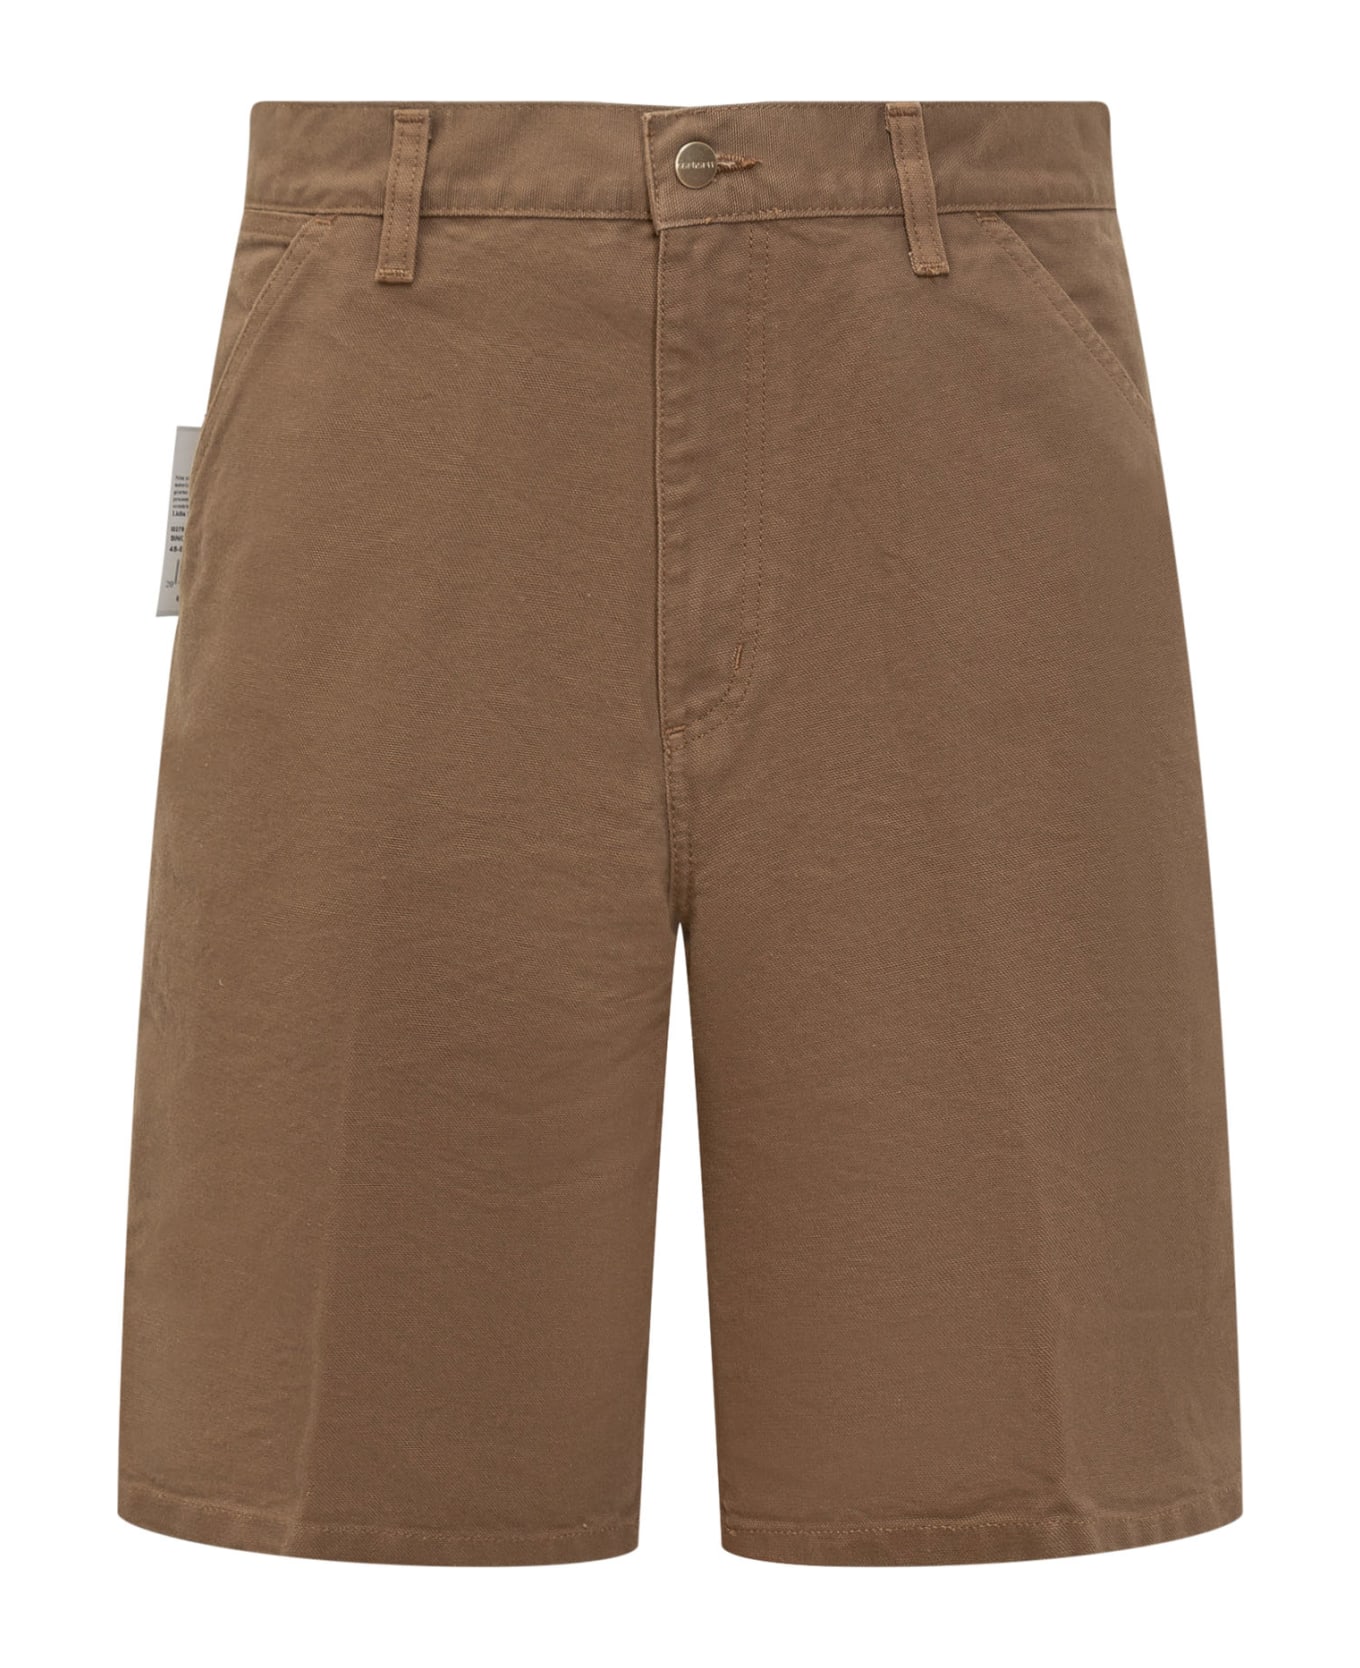 Carhartt Cotton Shorts - BOURBON AGED CANVAS